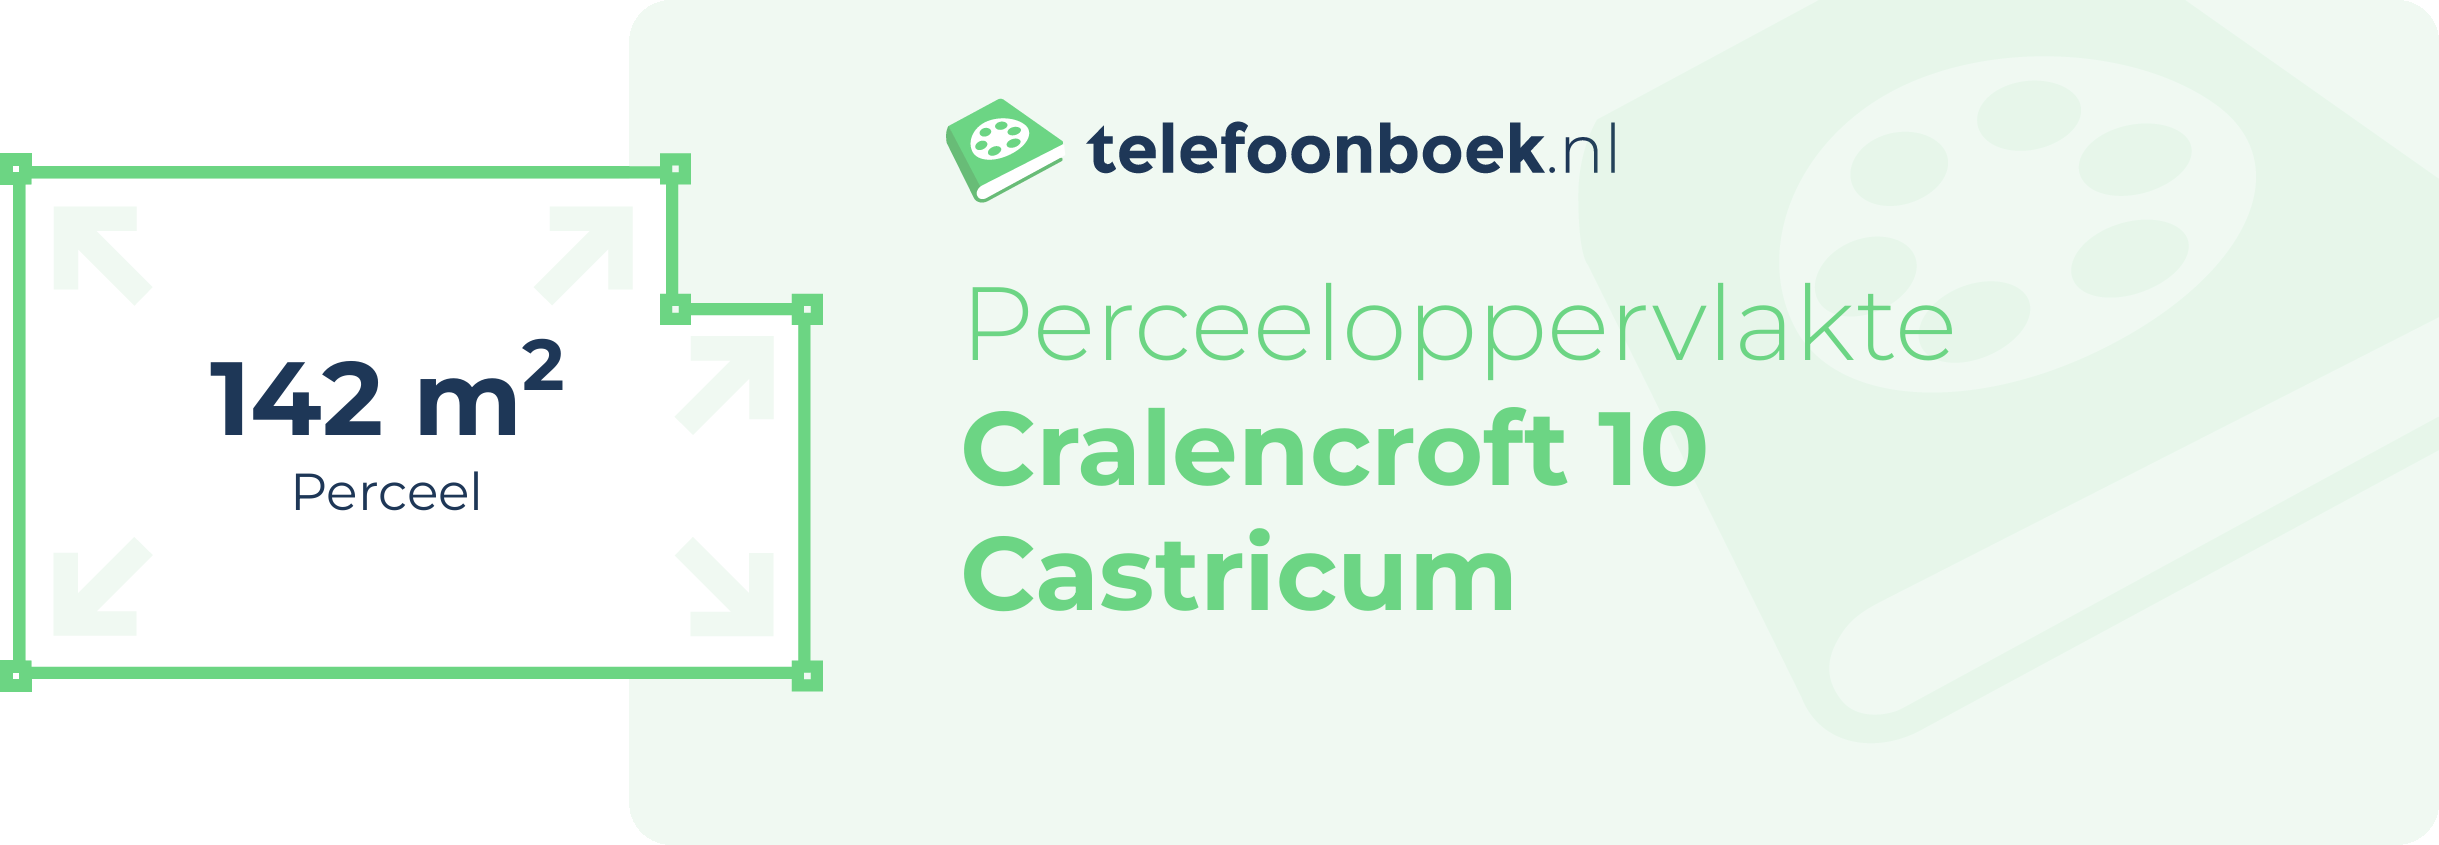 Perceeloppervlakte Cralencroft 10 Castricum